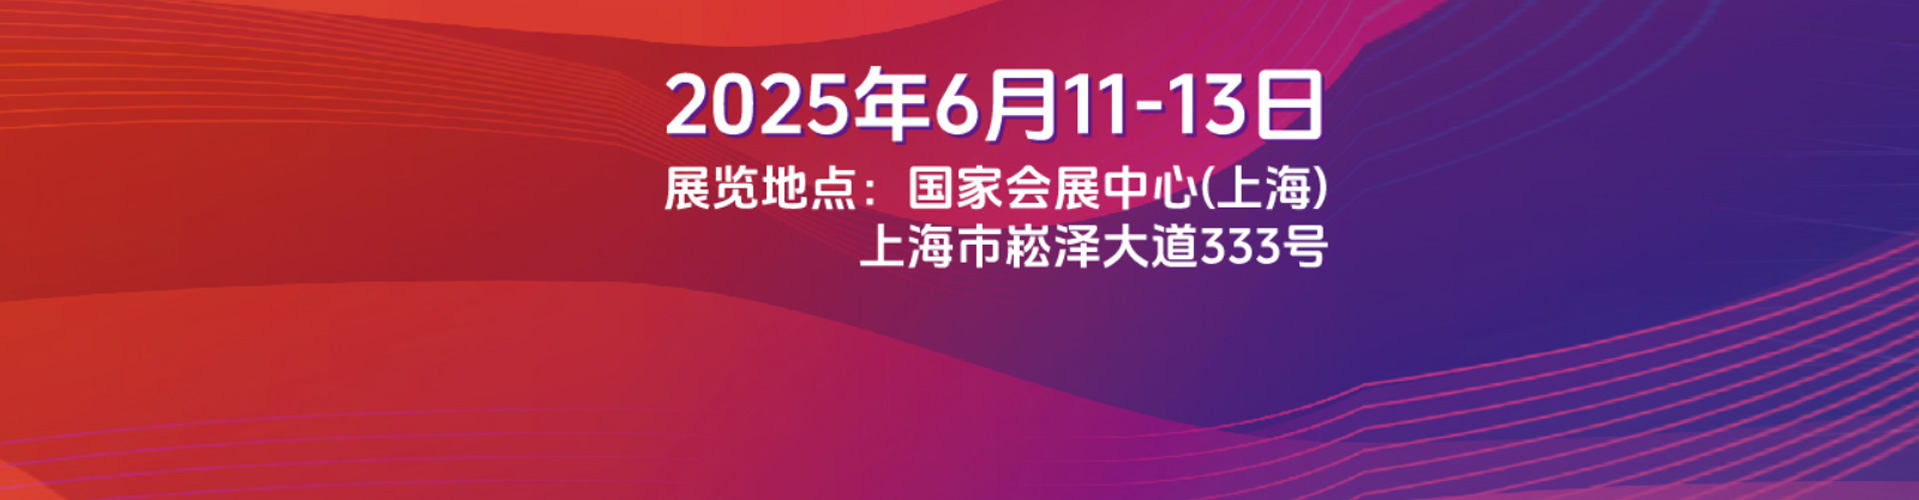 SNEC*十四届2020国际太阳能光伏与智慧能源上海展览会